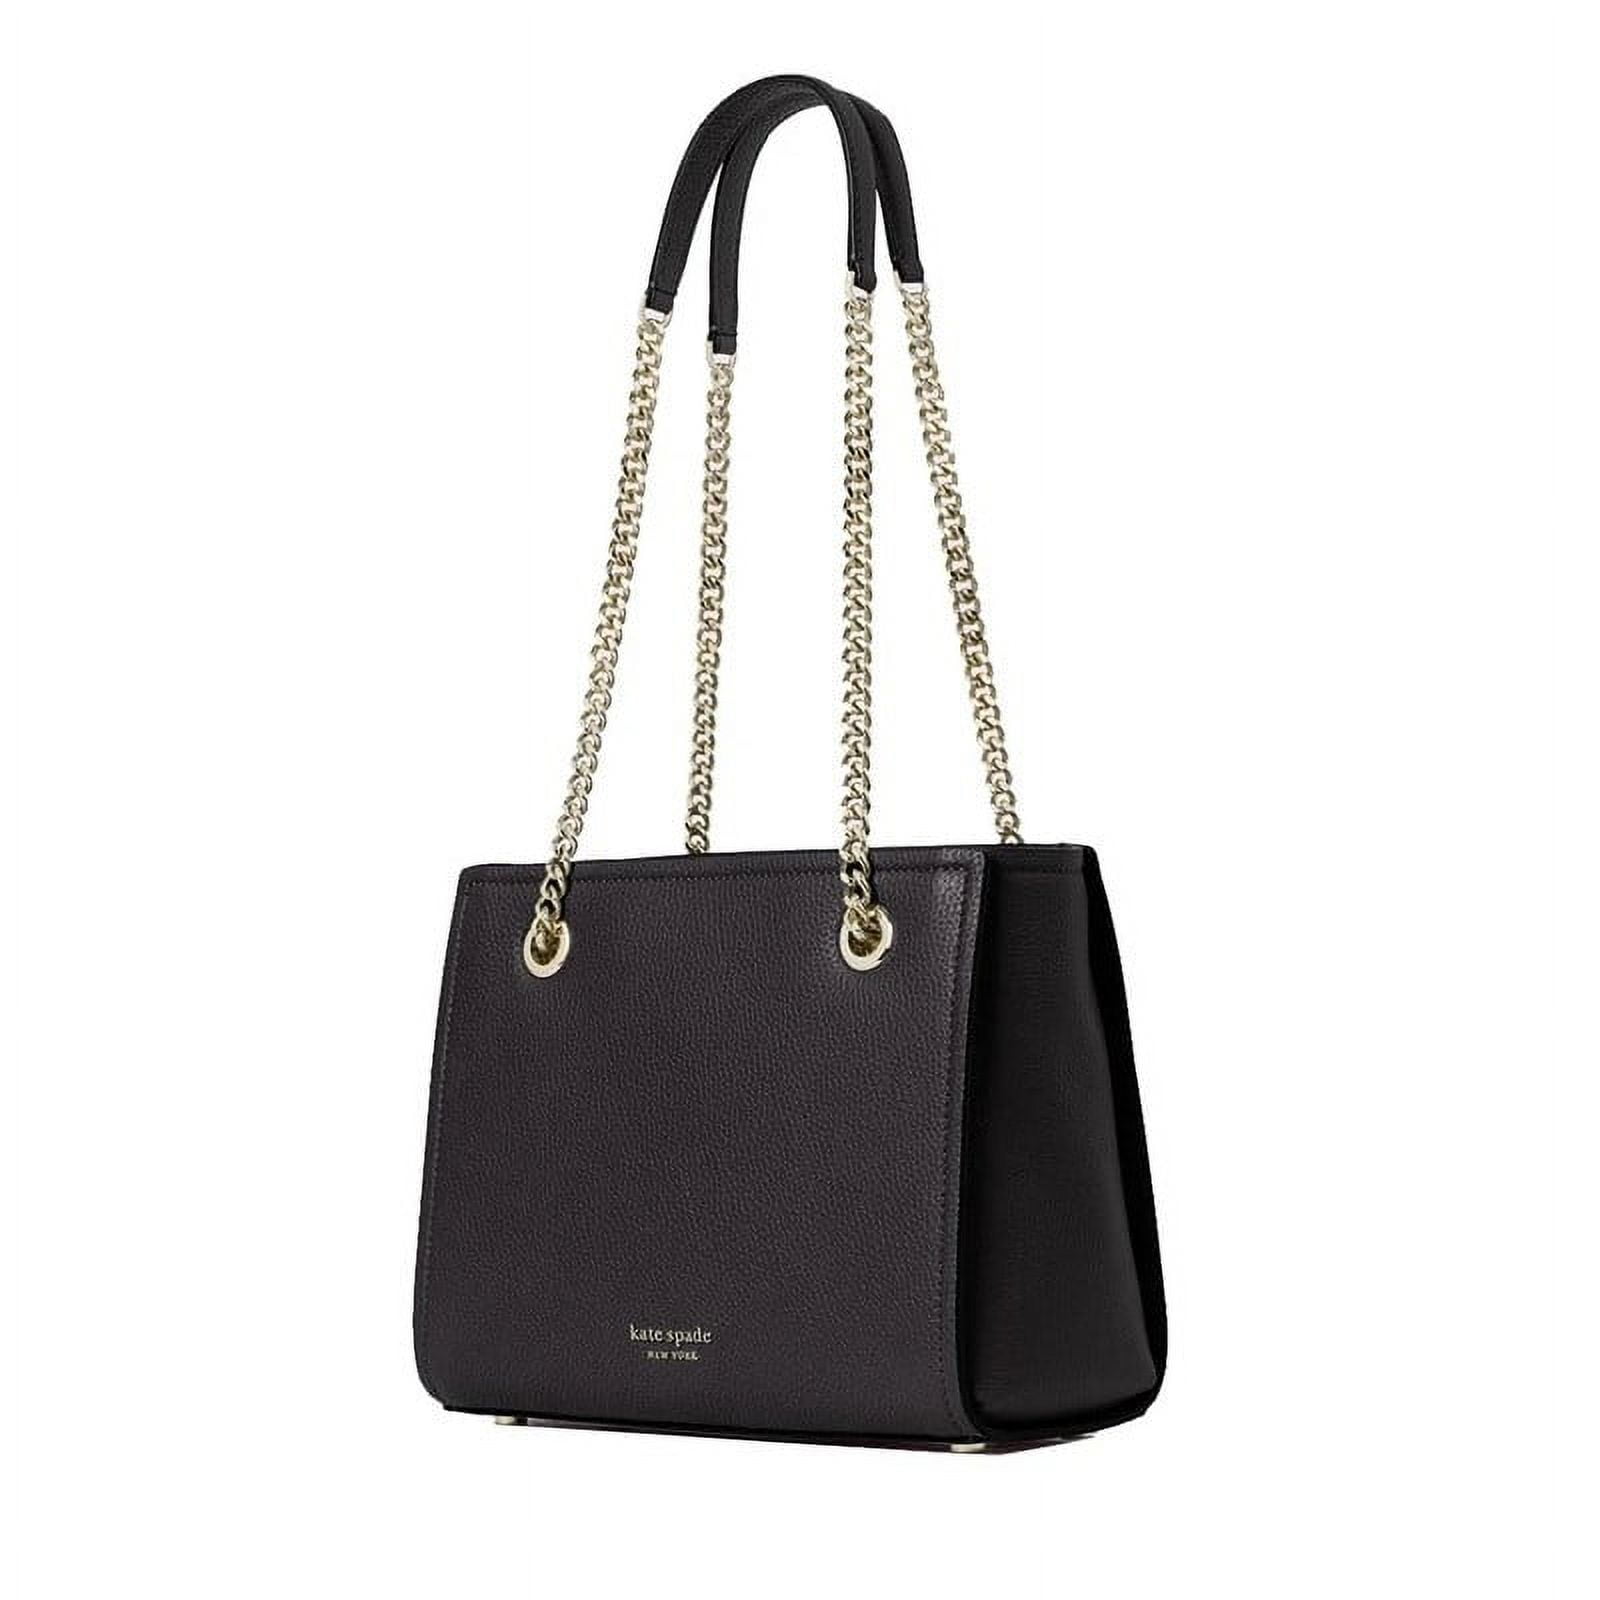 Small purse - Black - Ladies | H&M IN